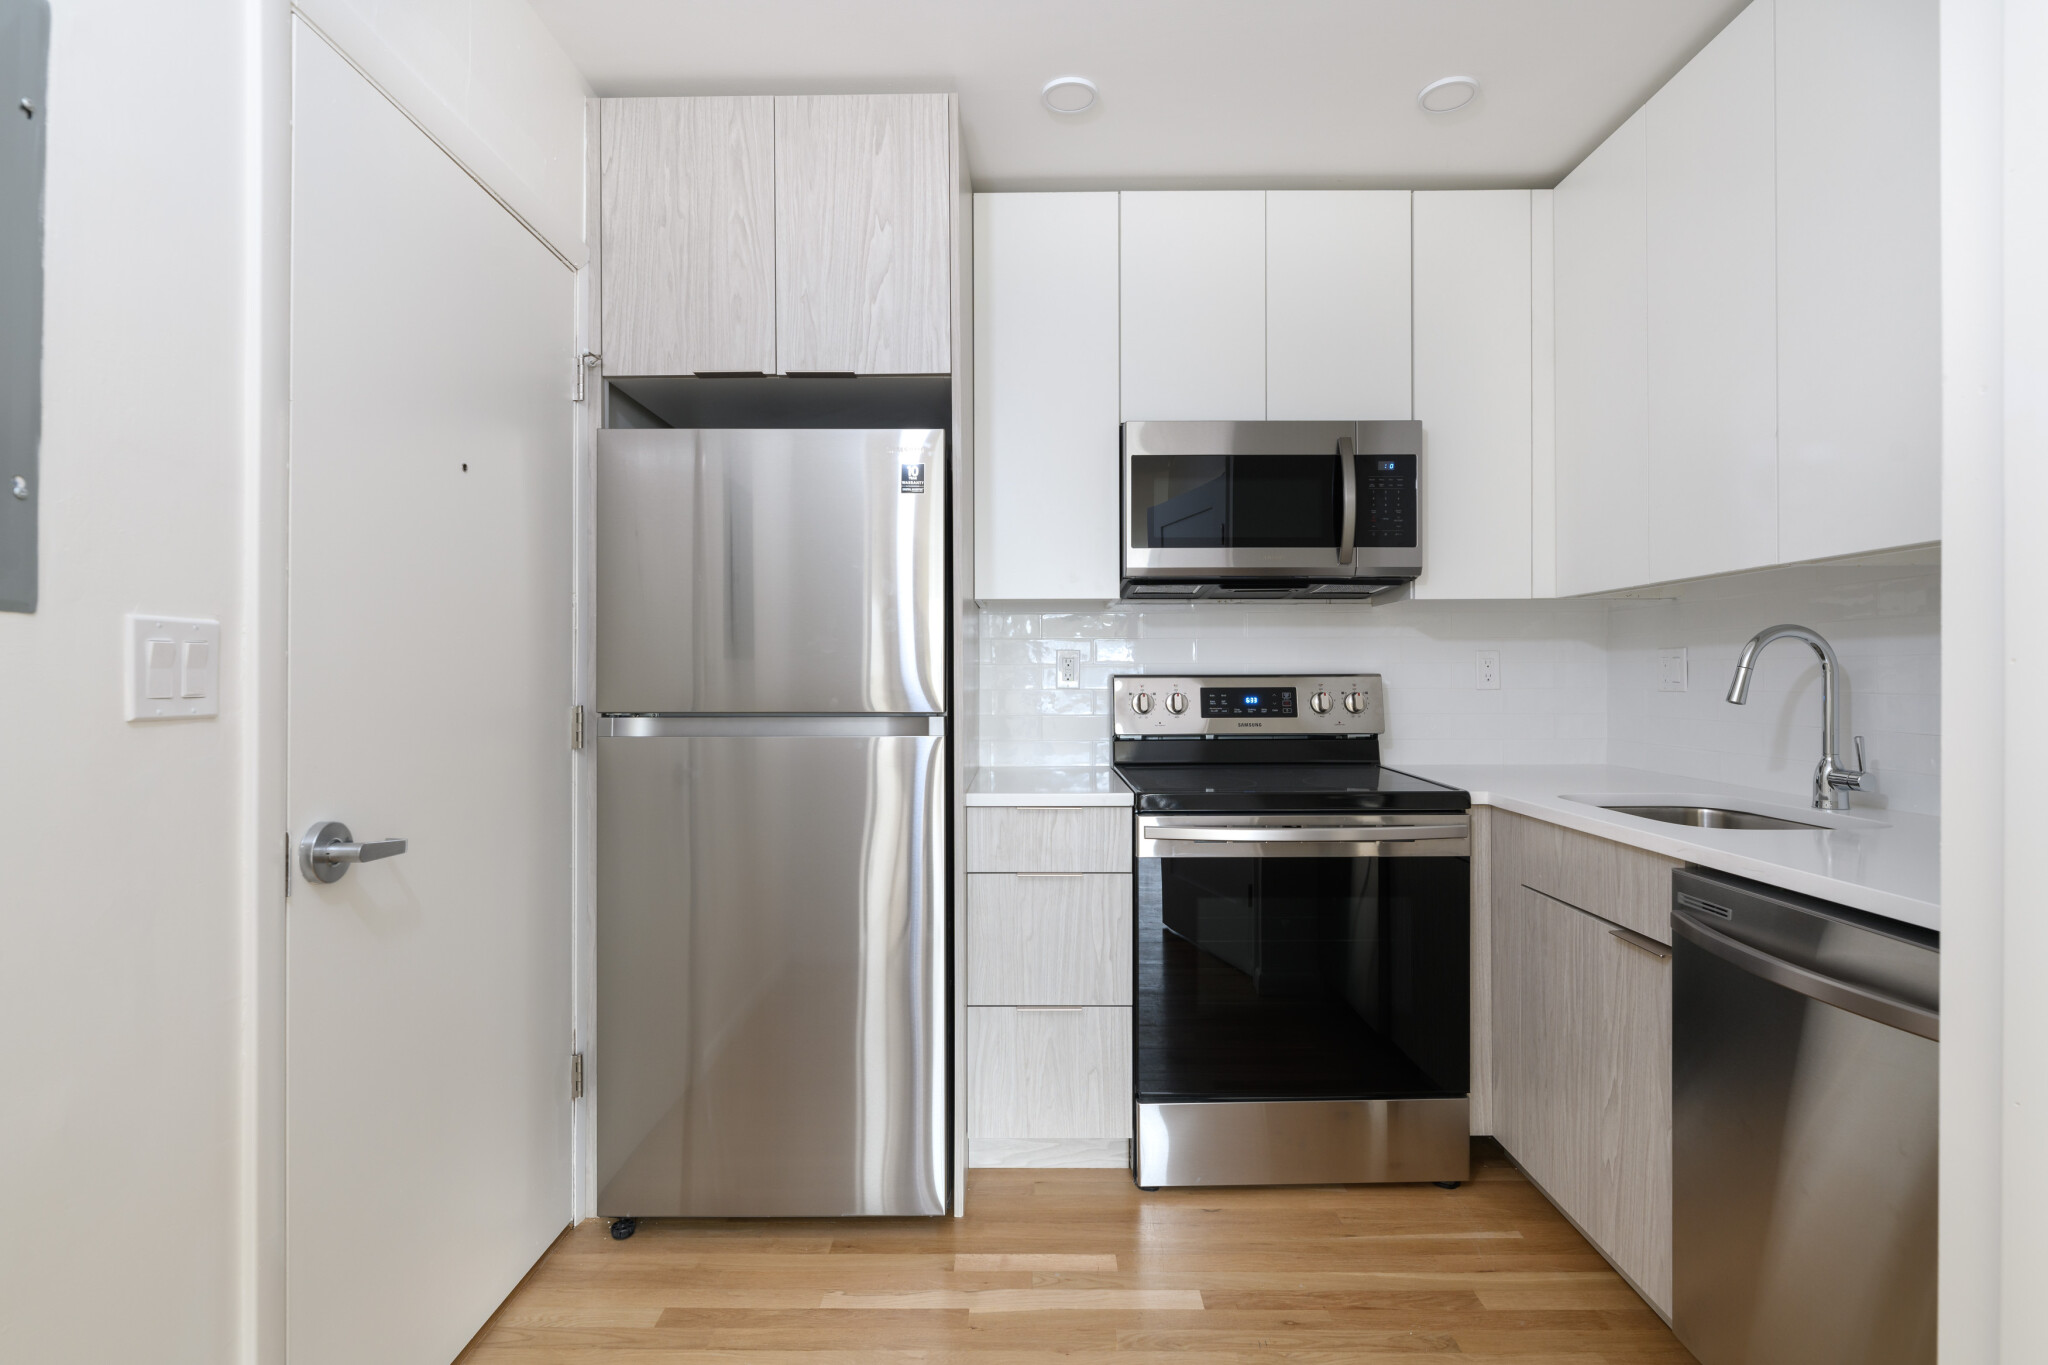 Photos of apartment on Perkins St.,Boston MA 02130